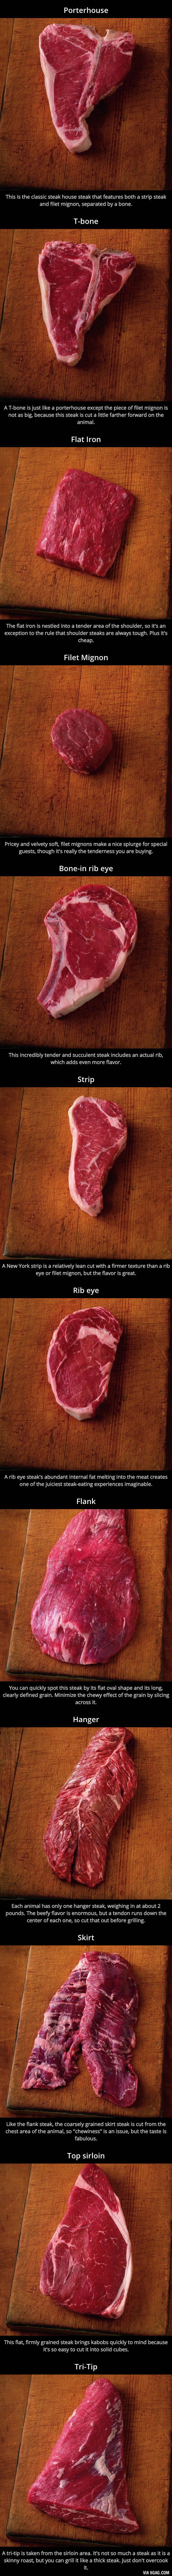 Different Types Of Steak